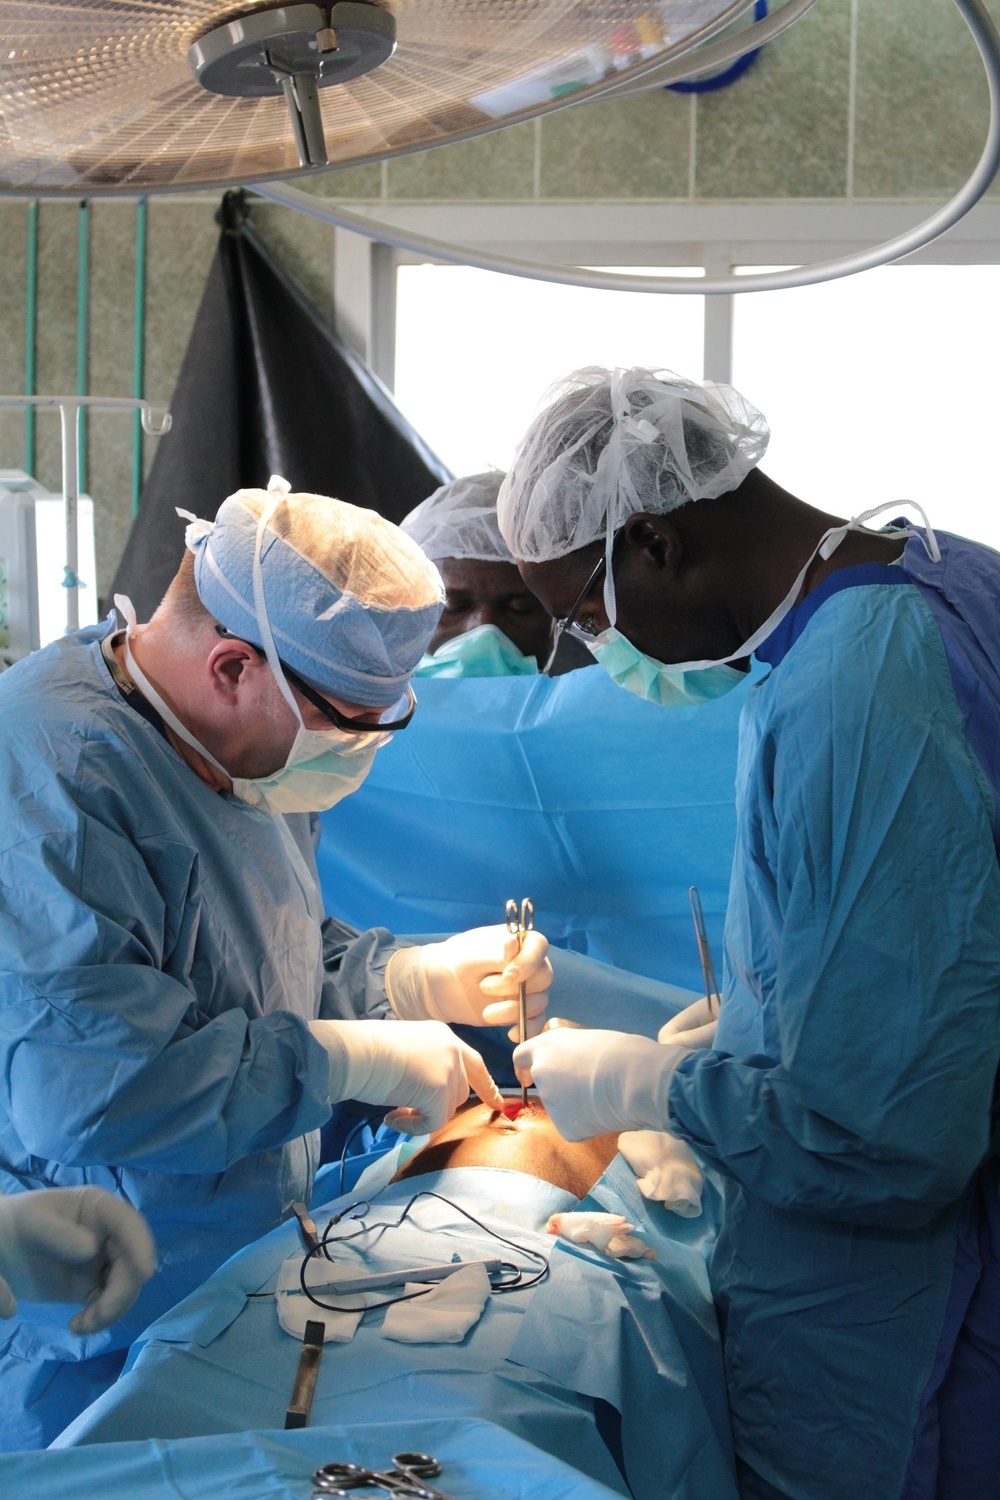 MEDRETE brings US military medical professionals to Senegal